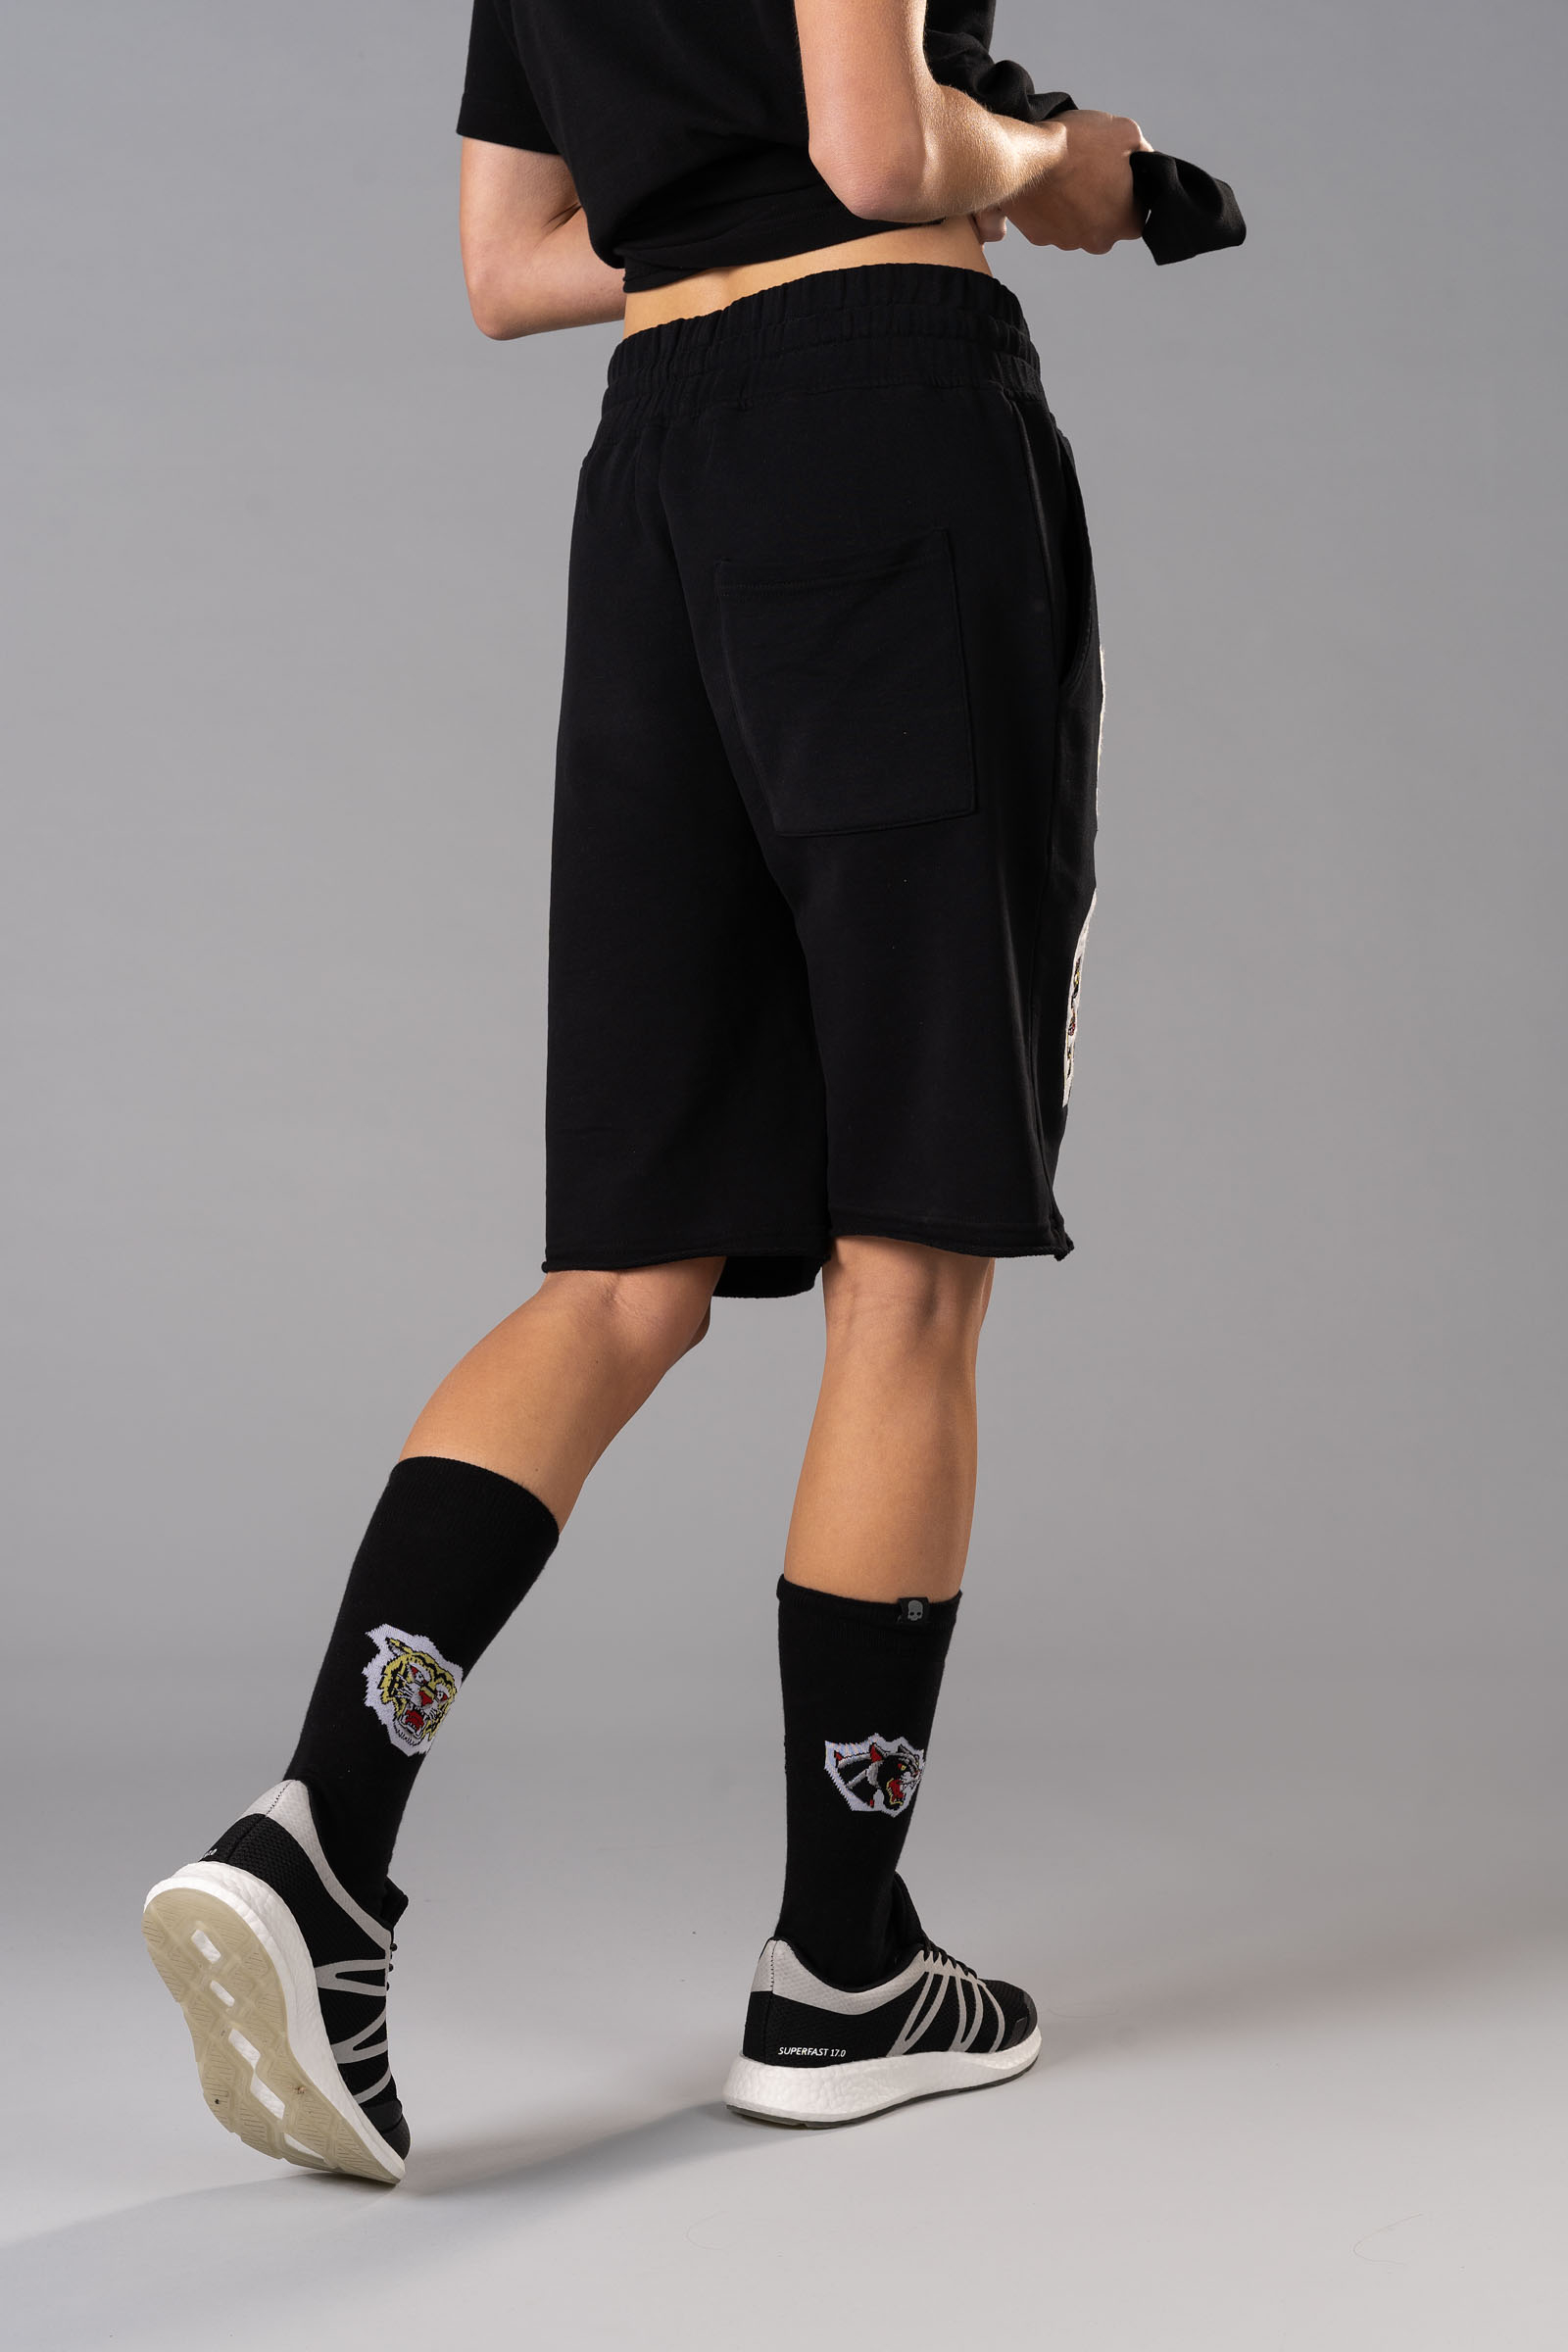 CUSTOM TATTOO SHORTS - BLACK - Abbigliamento sportivo | Hydrogen